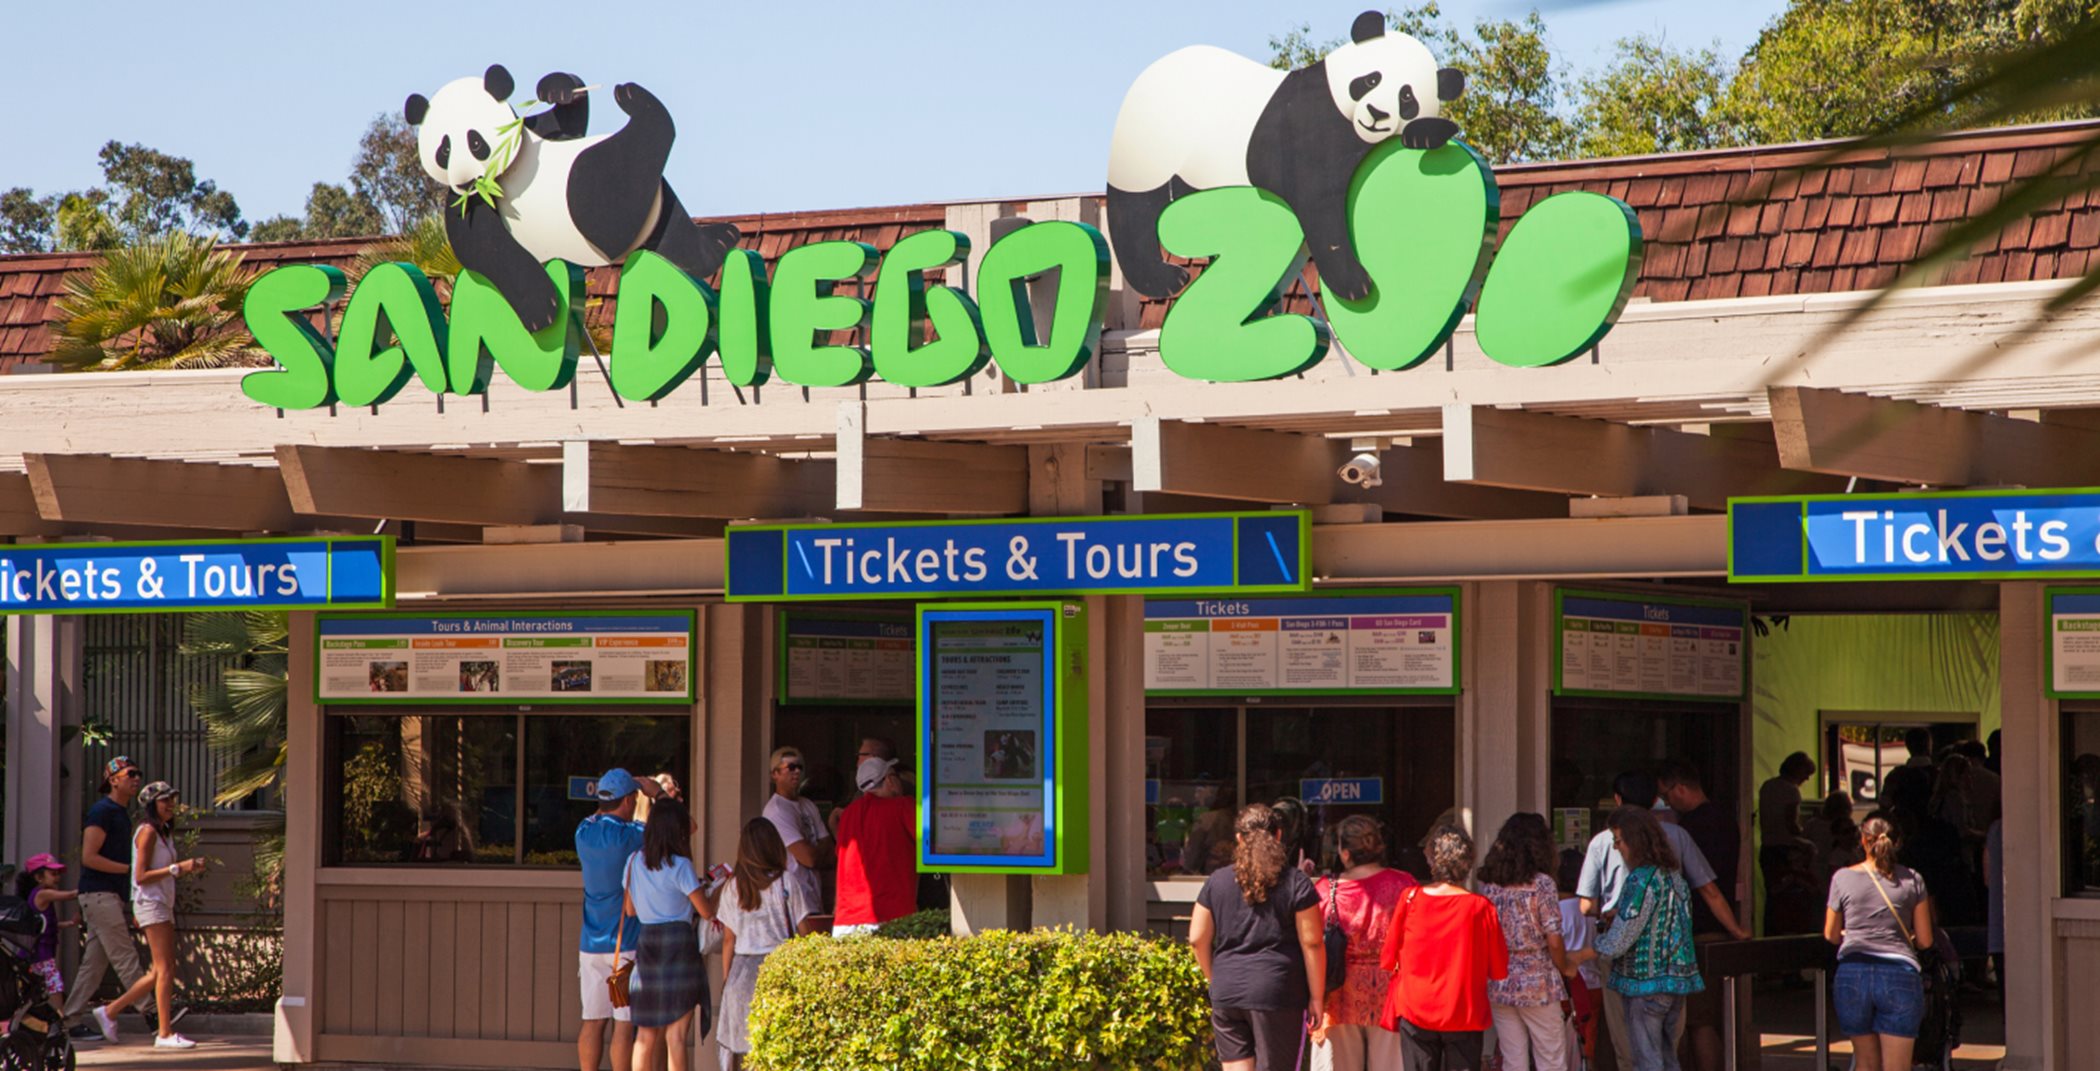 San Diego Zoo Entrance sign